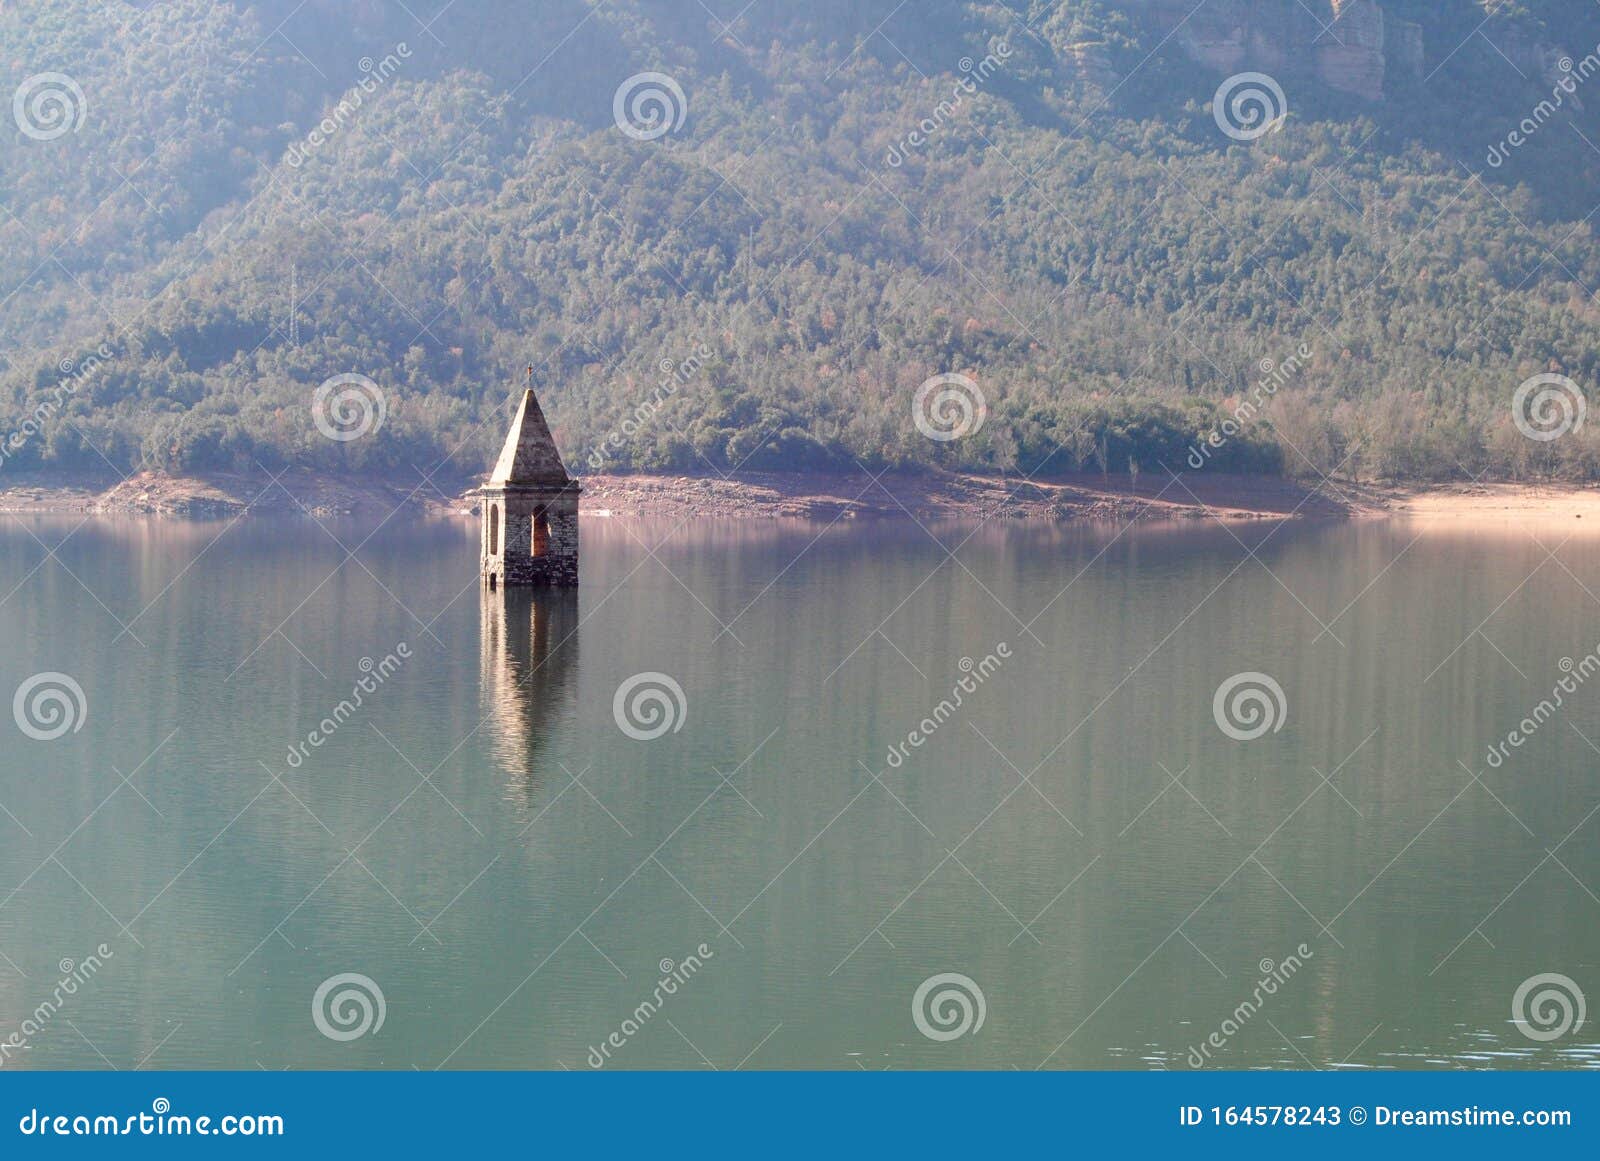 Iglesia hundida en un lago imagen de archivo. Imagen de agua - 164578243